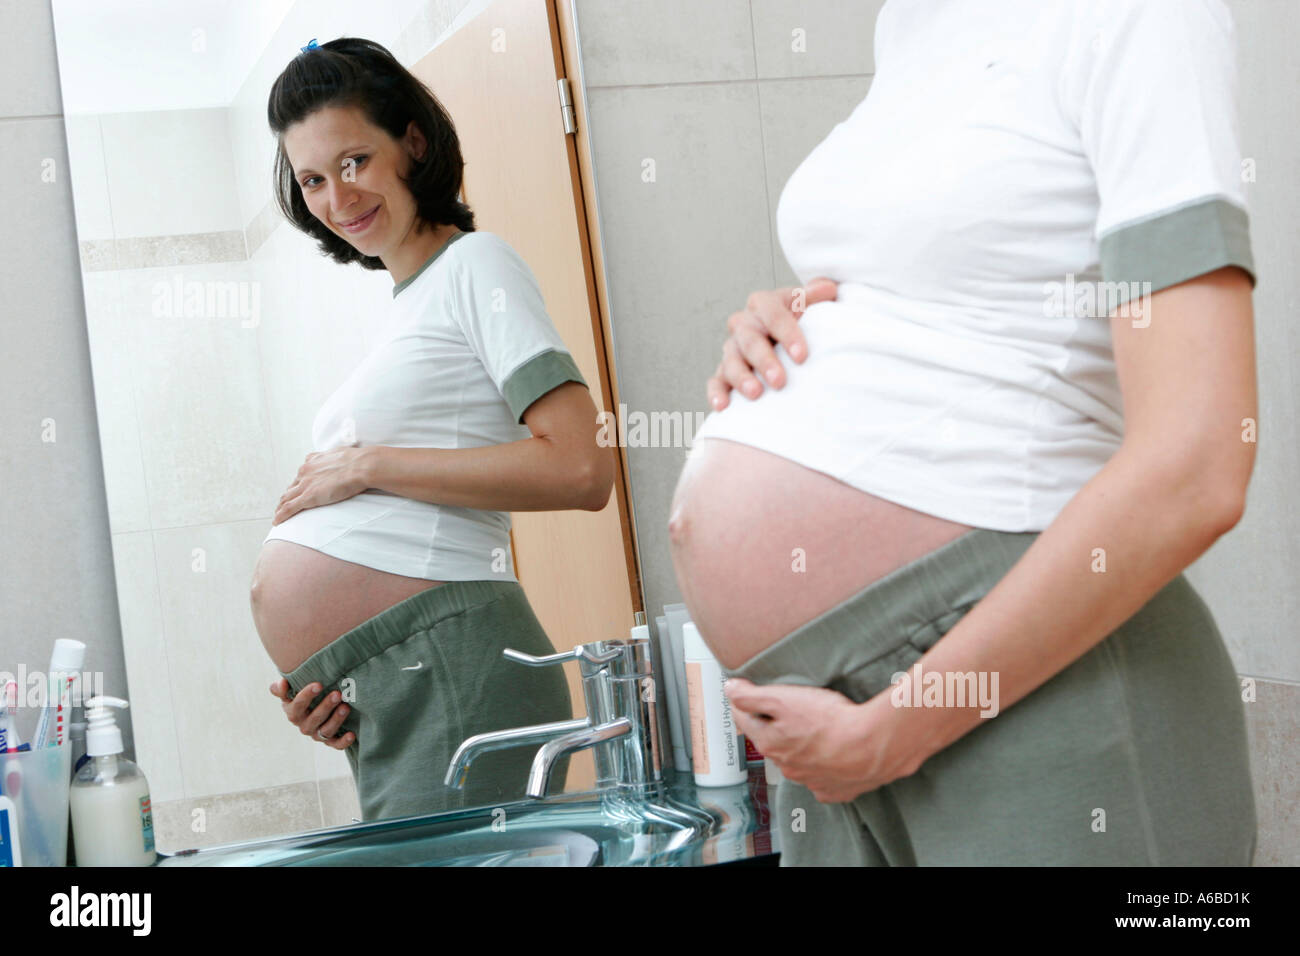 Pregnant woman in bathroom Stock Photo